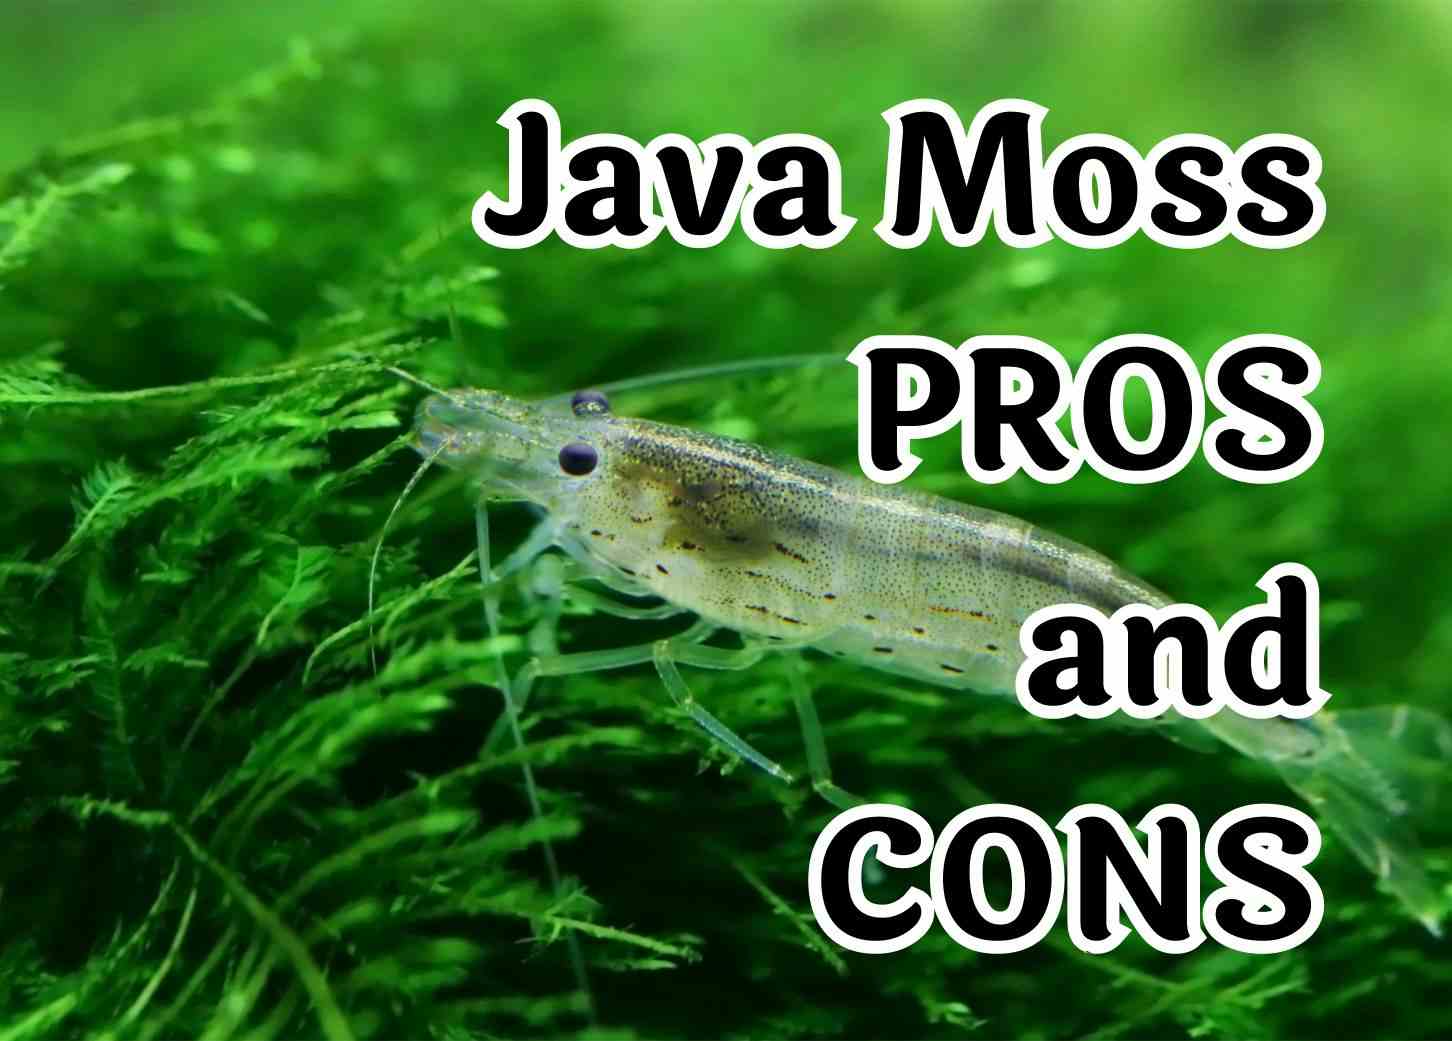 Essential Tips for Adding Java Moss to Your Aquarium